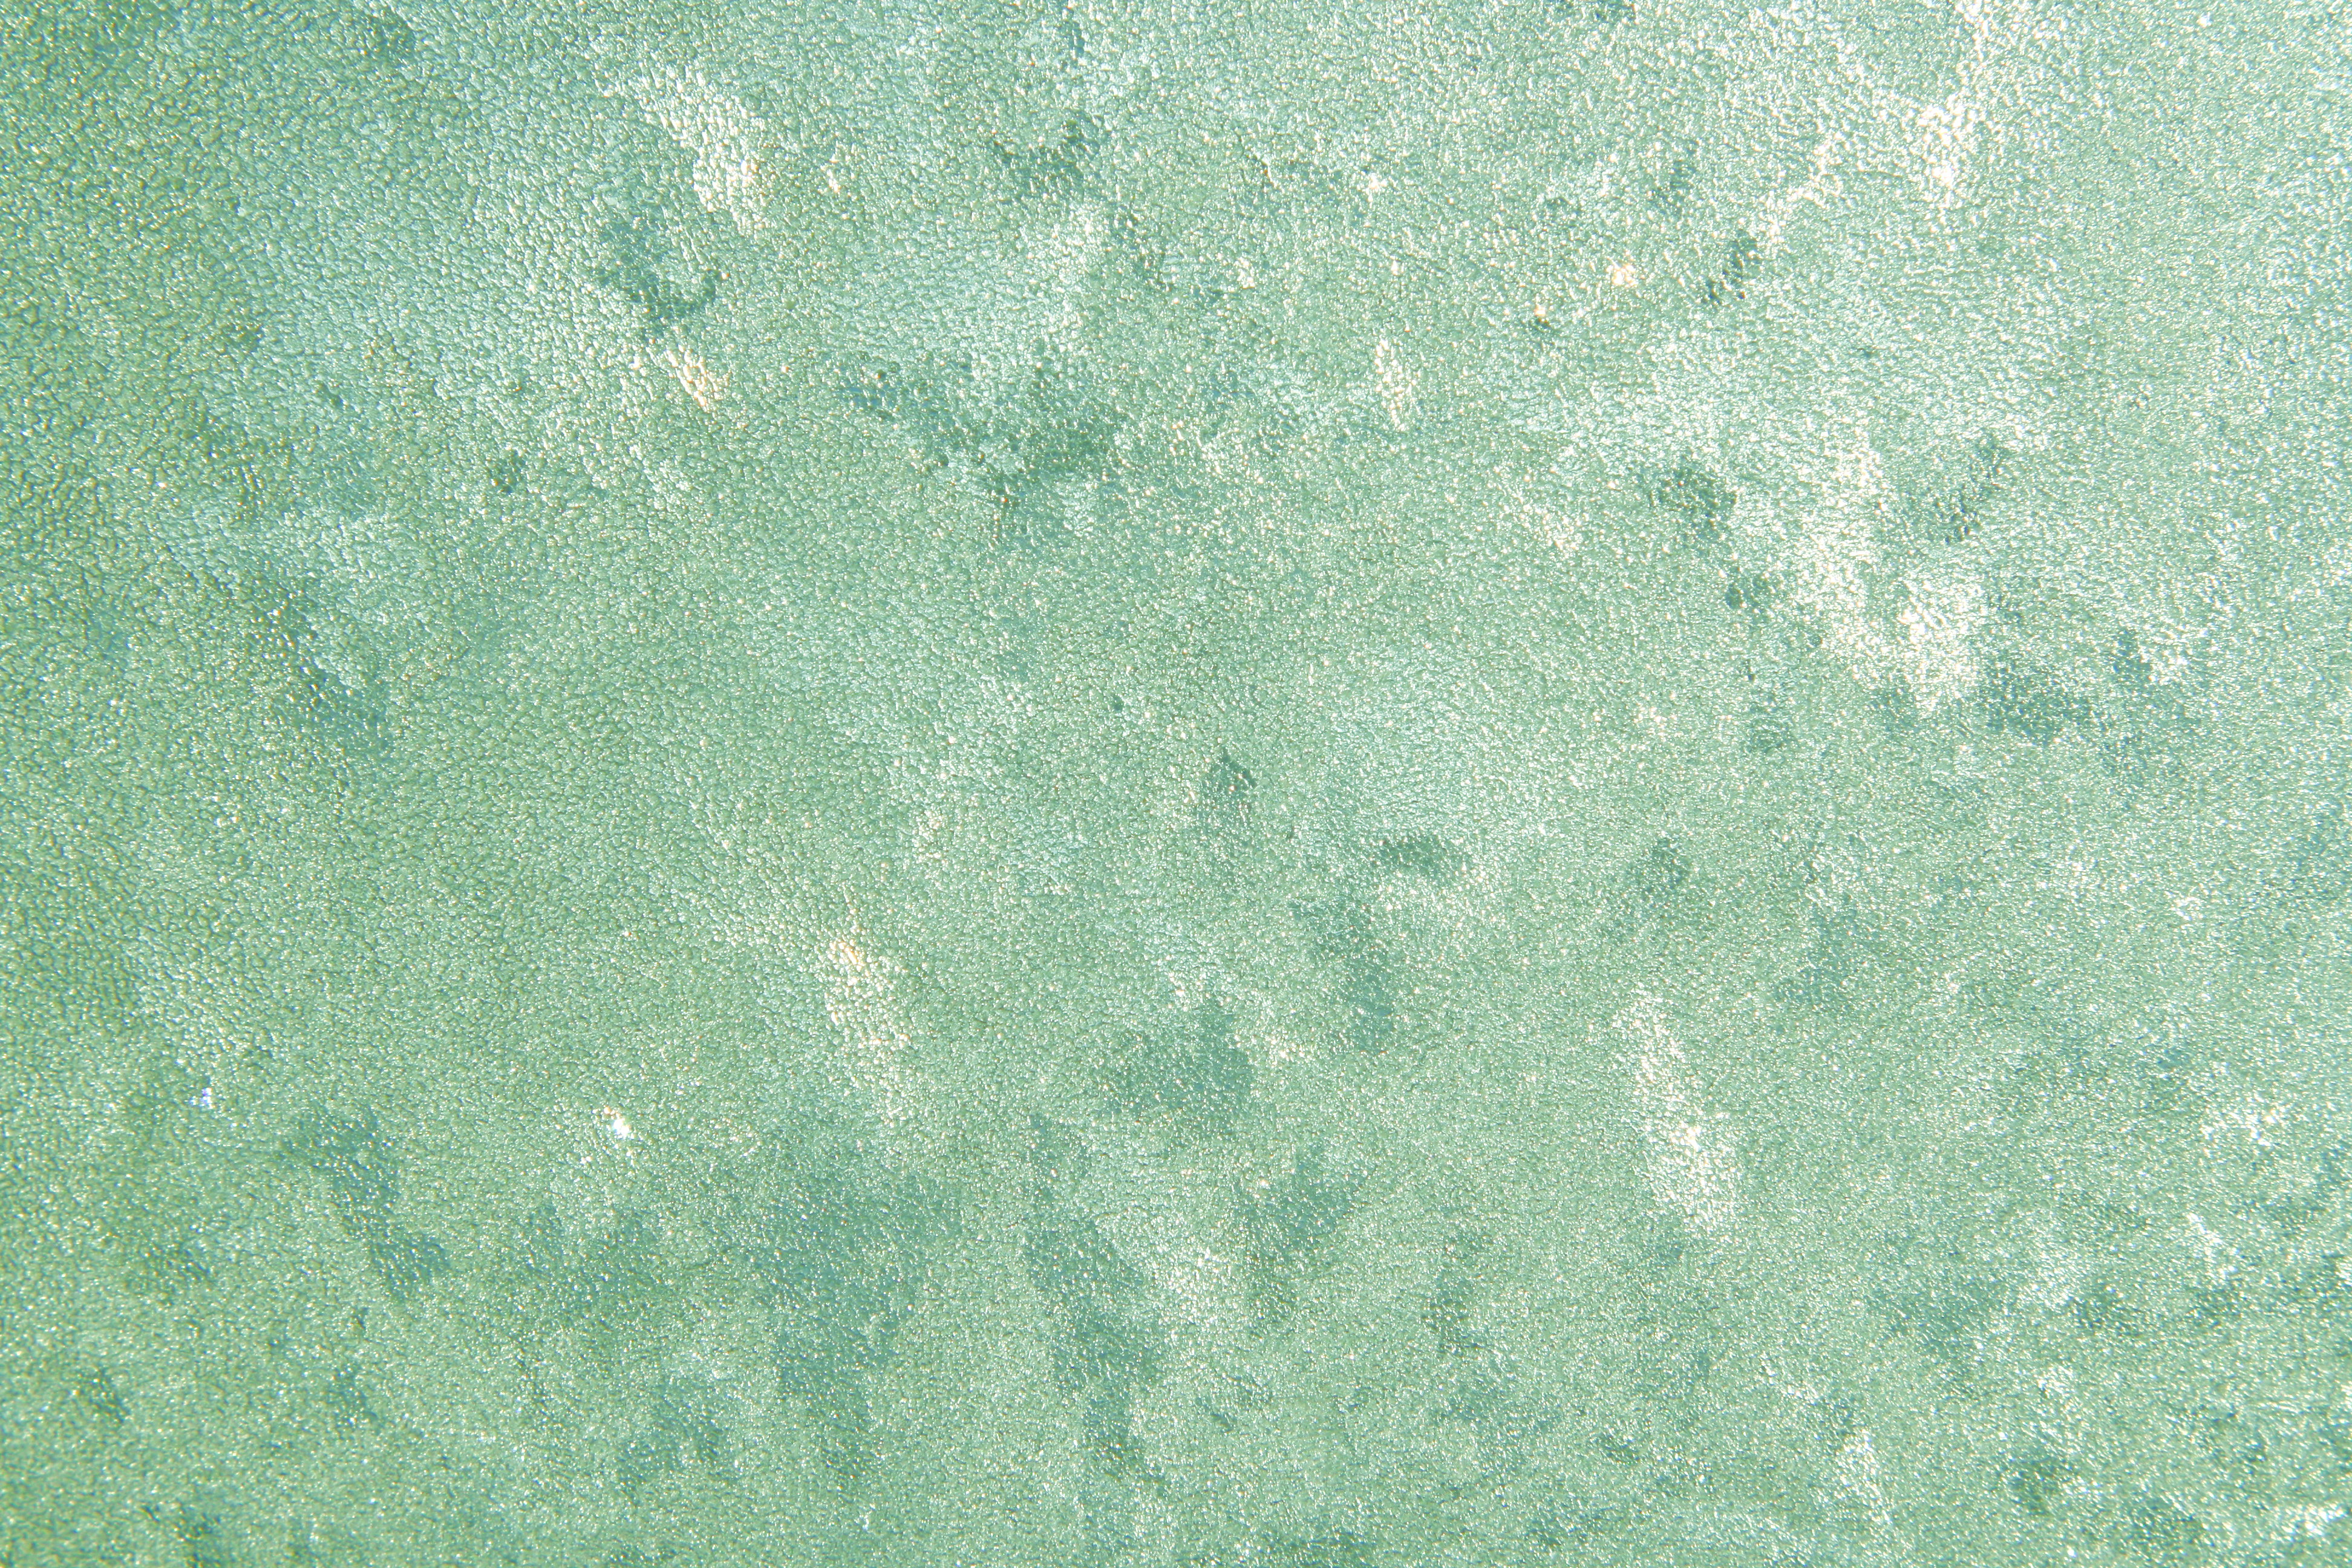 Seafoam Green Background